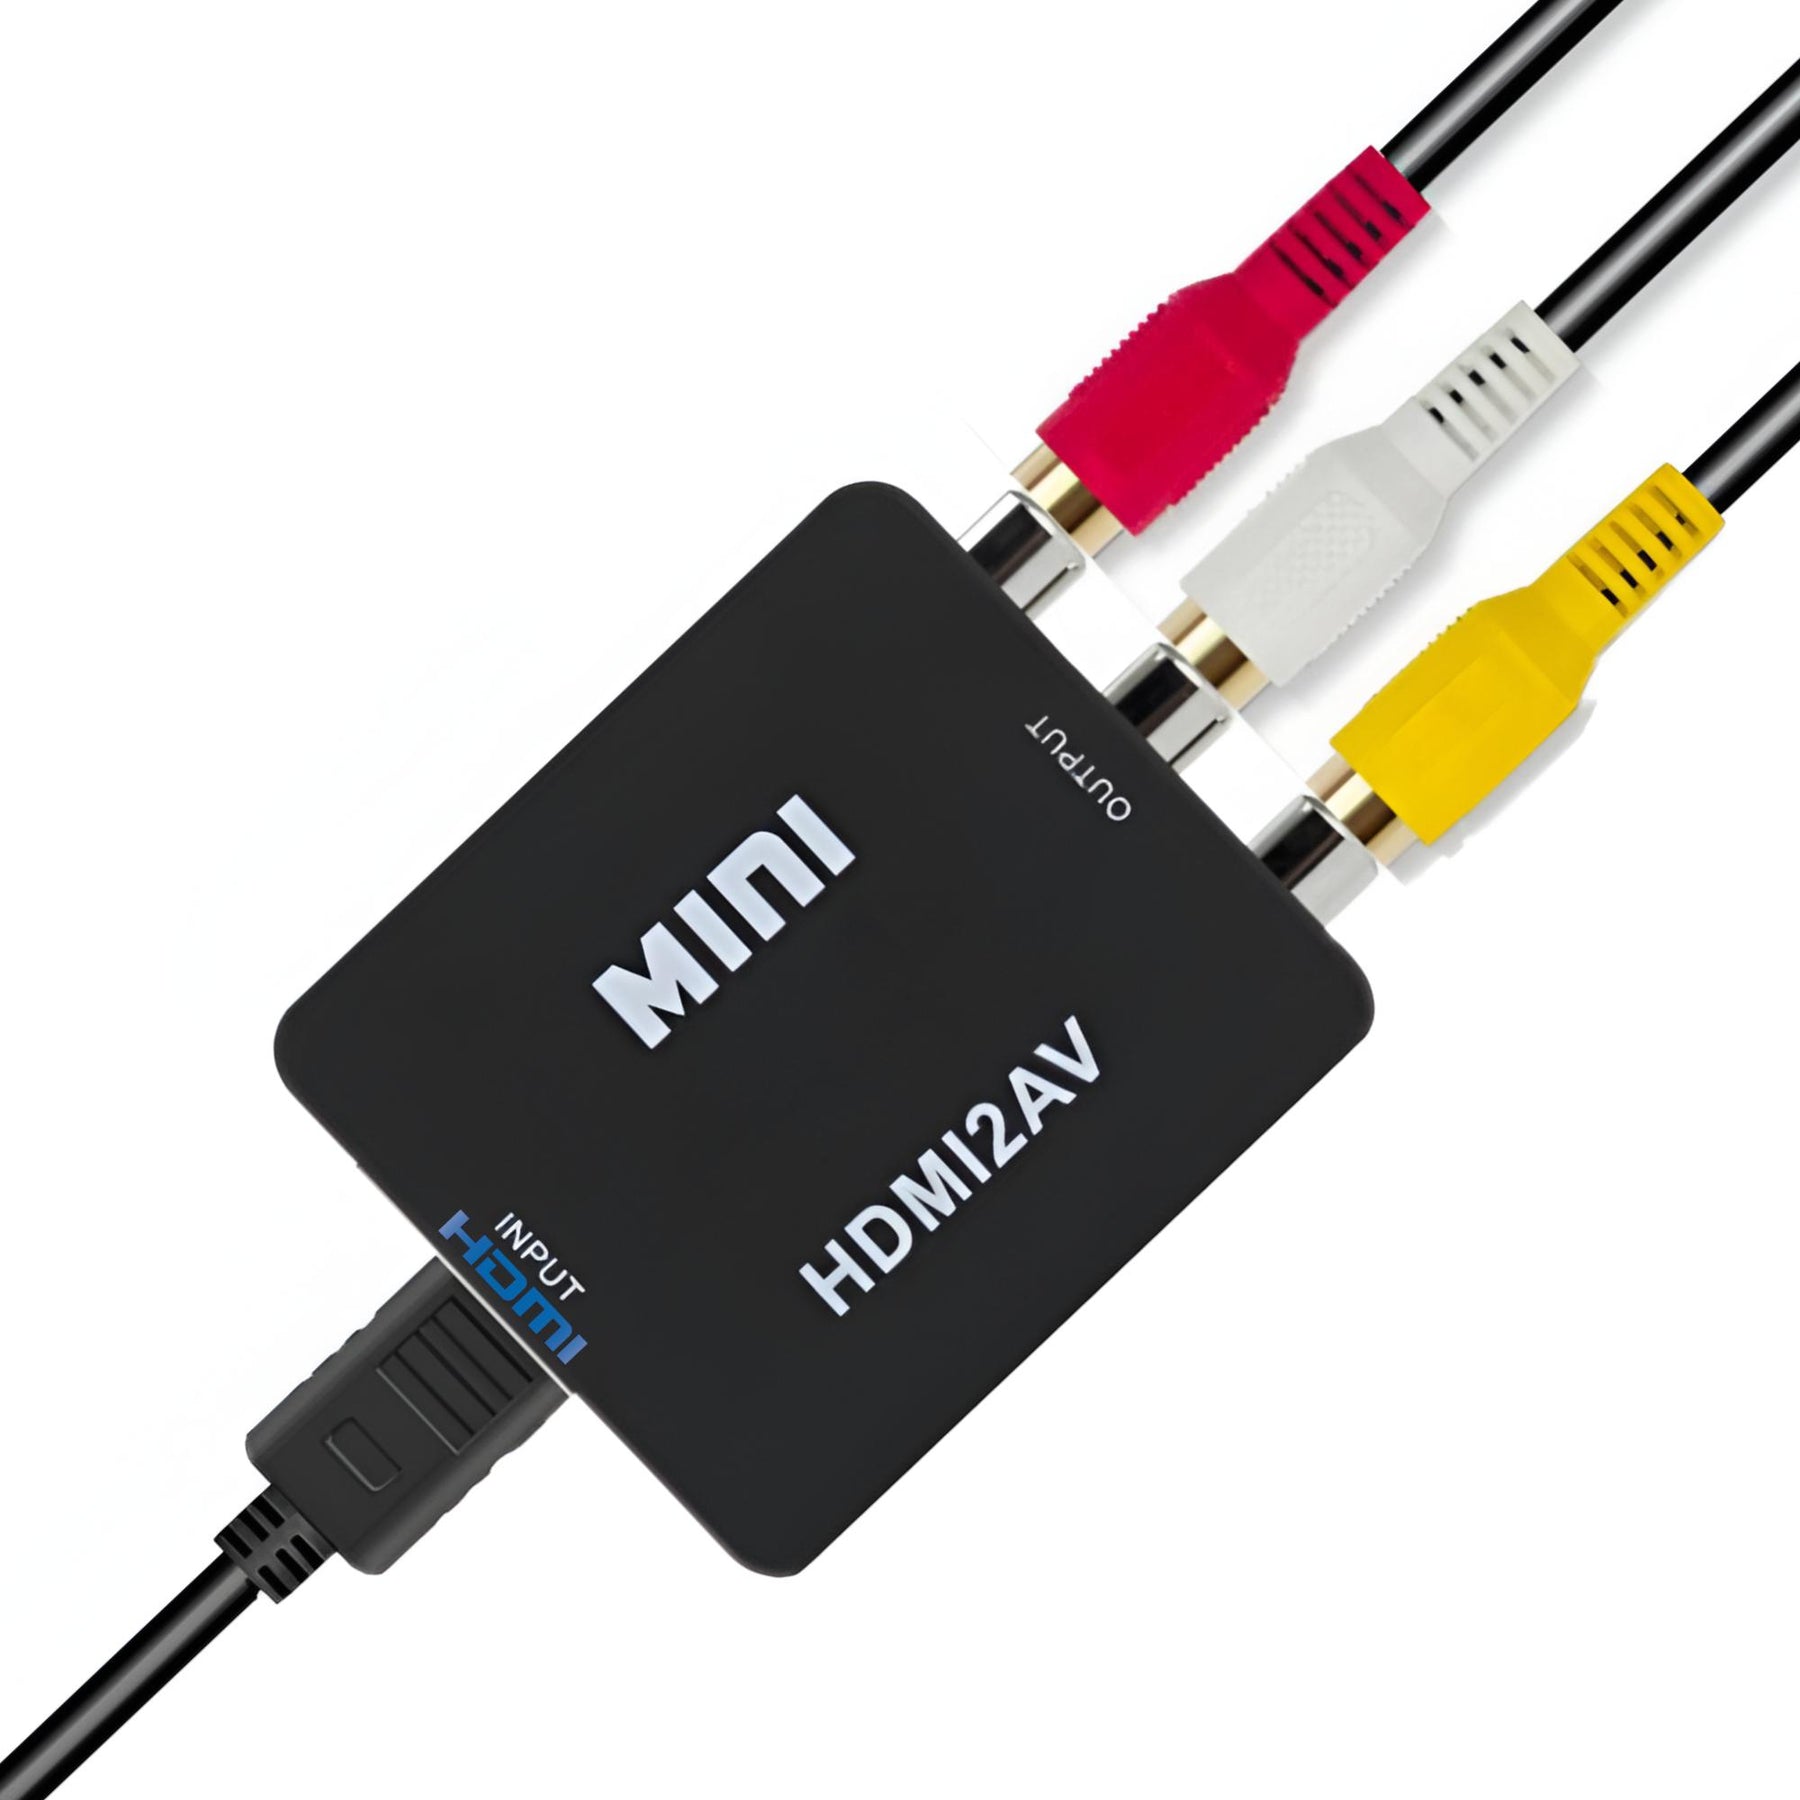 HDMI Inalámbrico - ¿Calidad Impecable SIN CABLES?